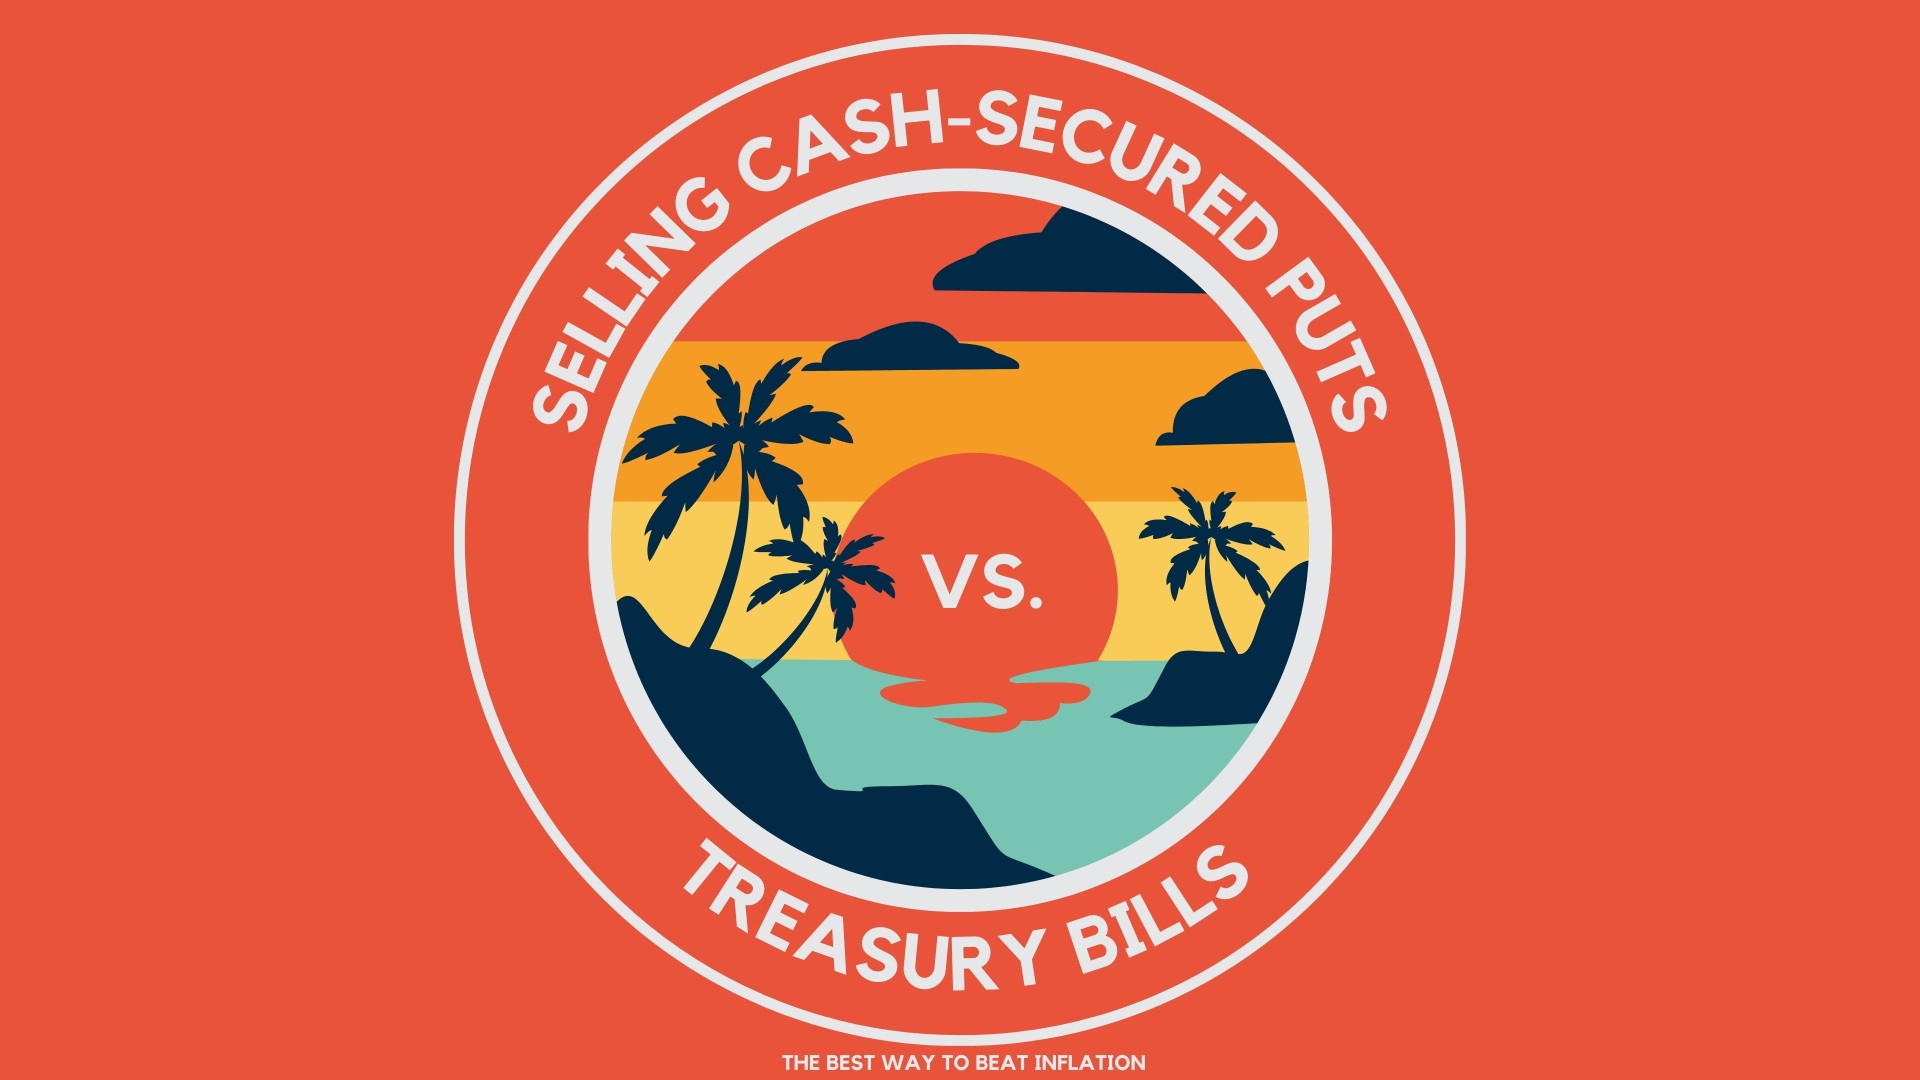 Selling Cash-Secured Puts vs. Treasury Bills